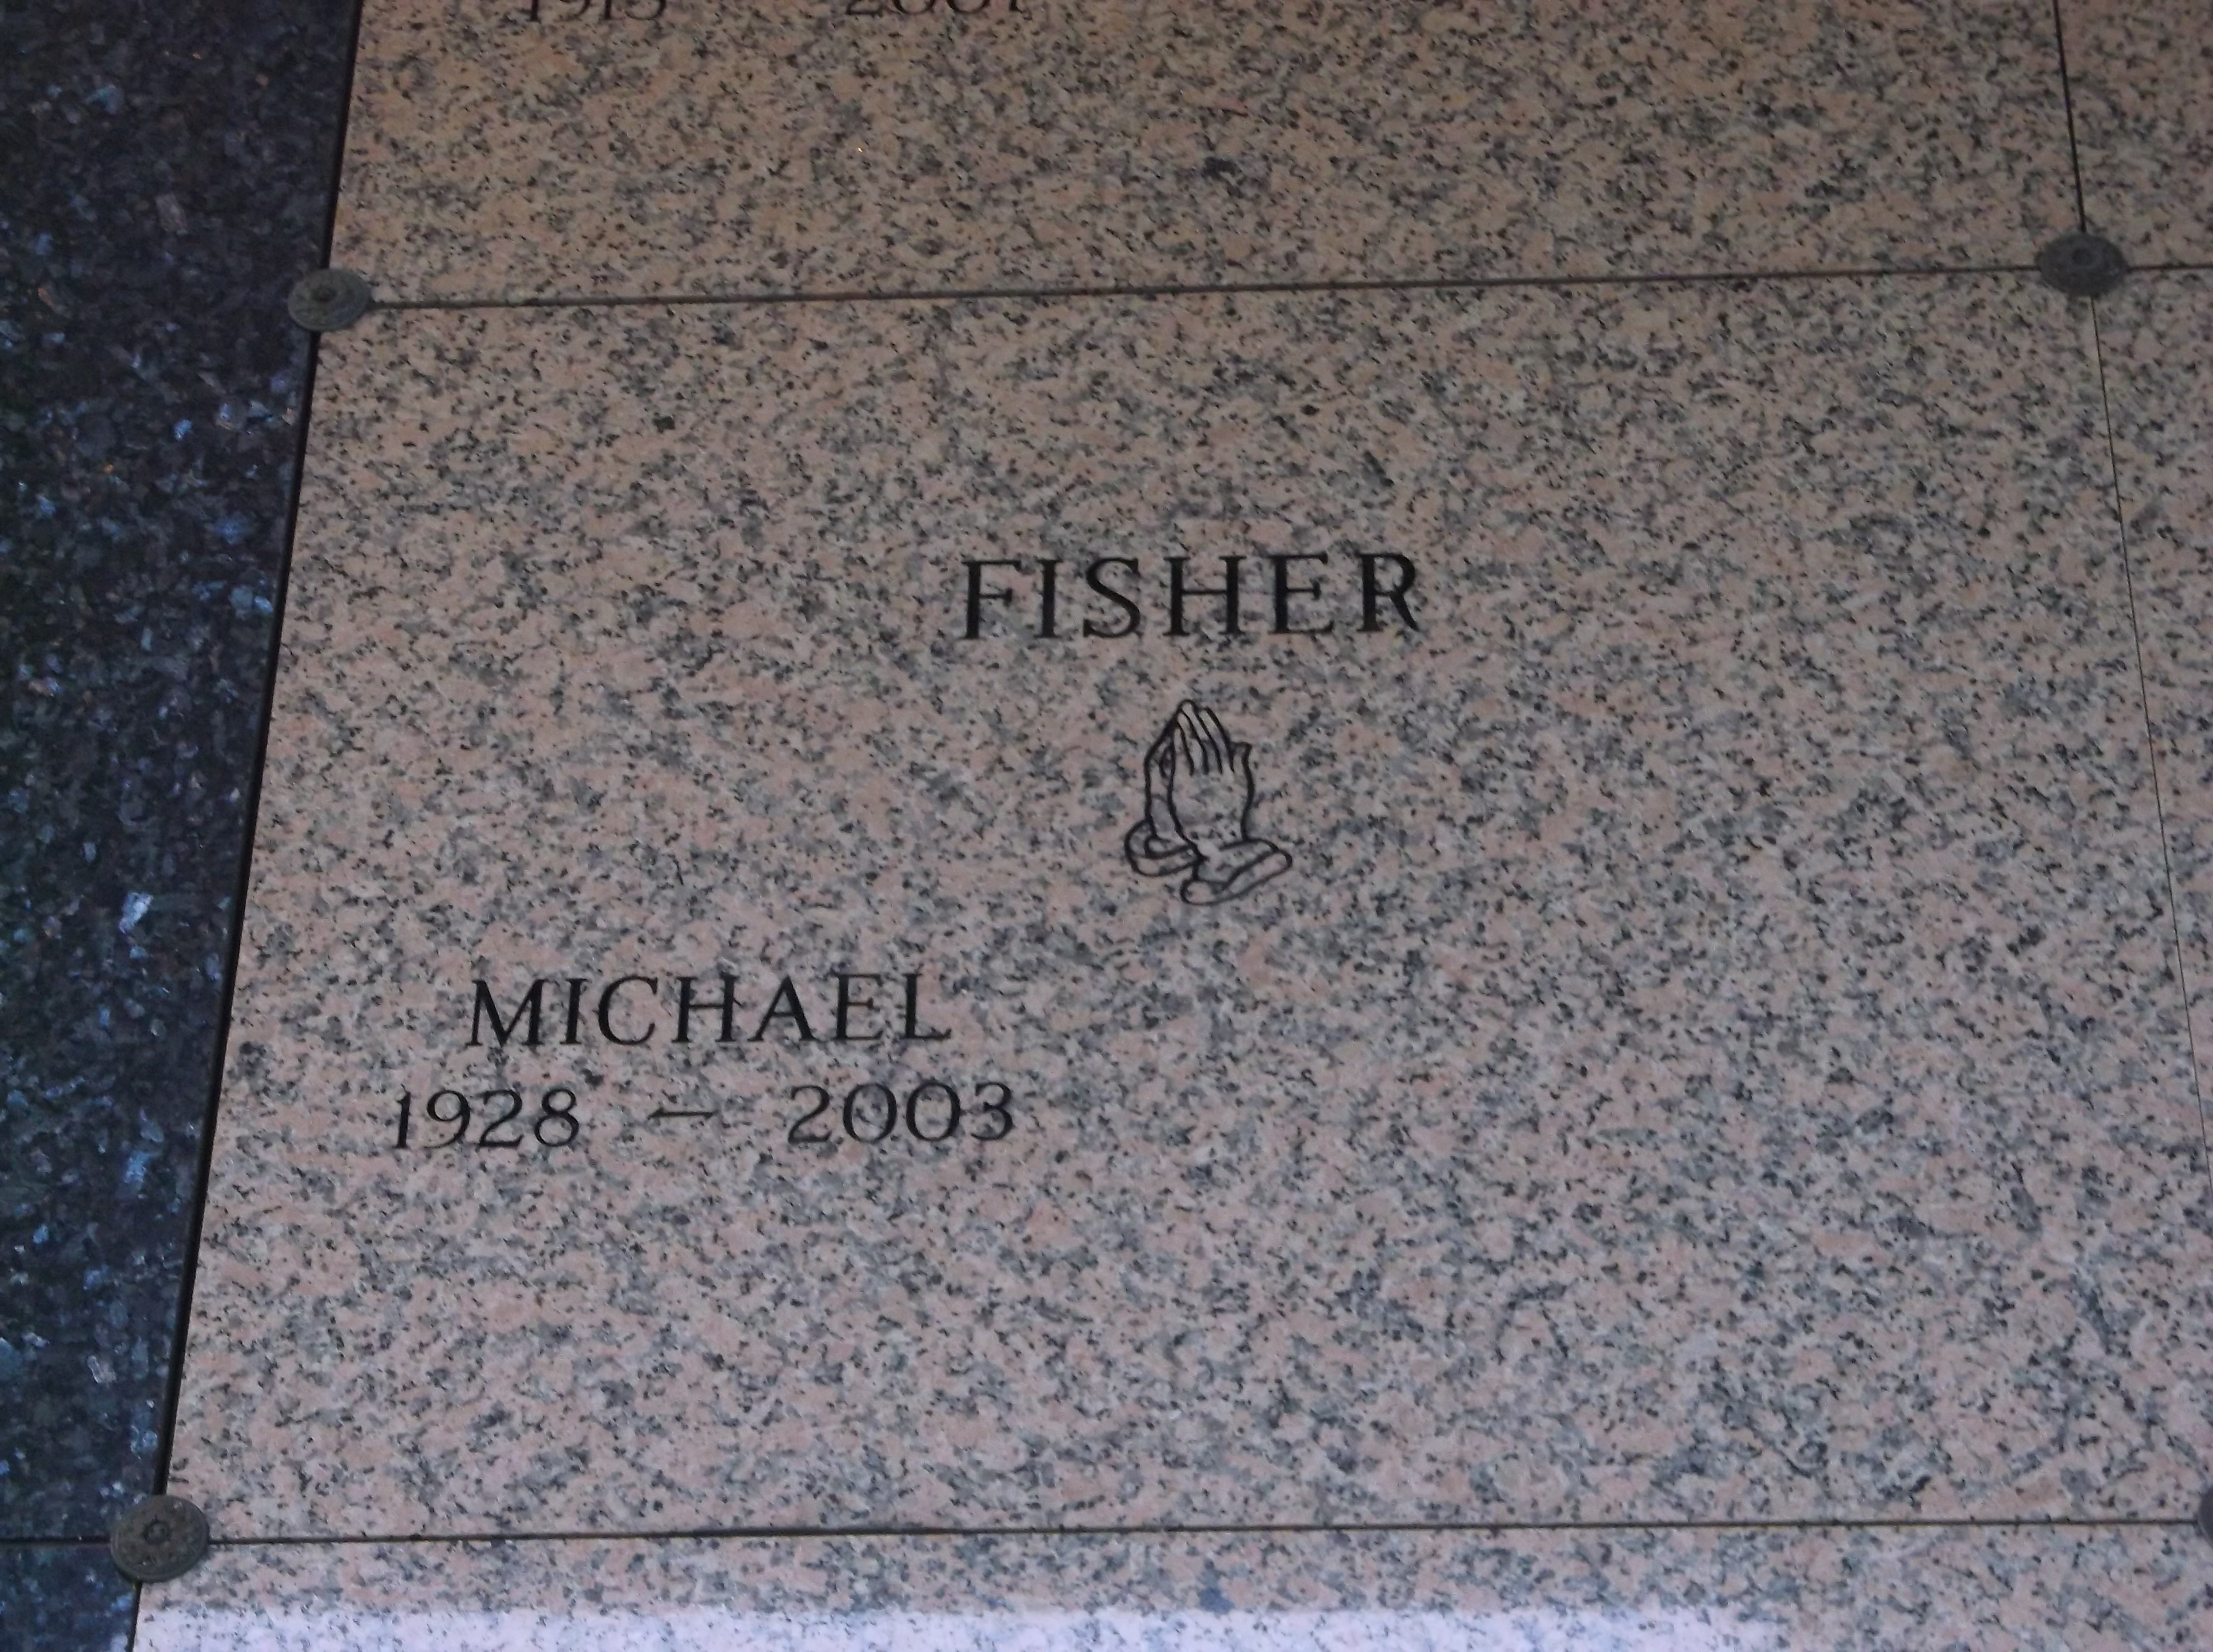 Michael Fisher